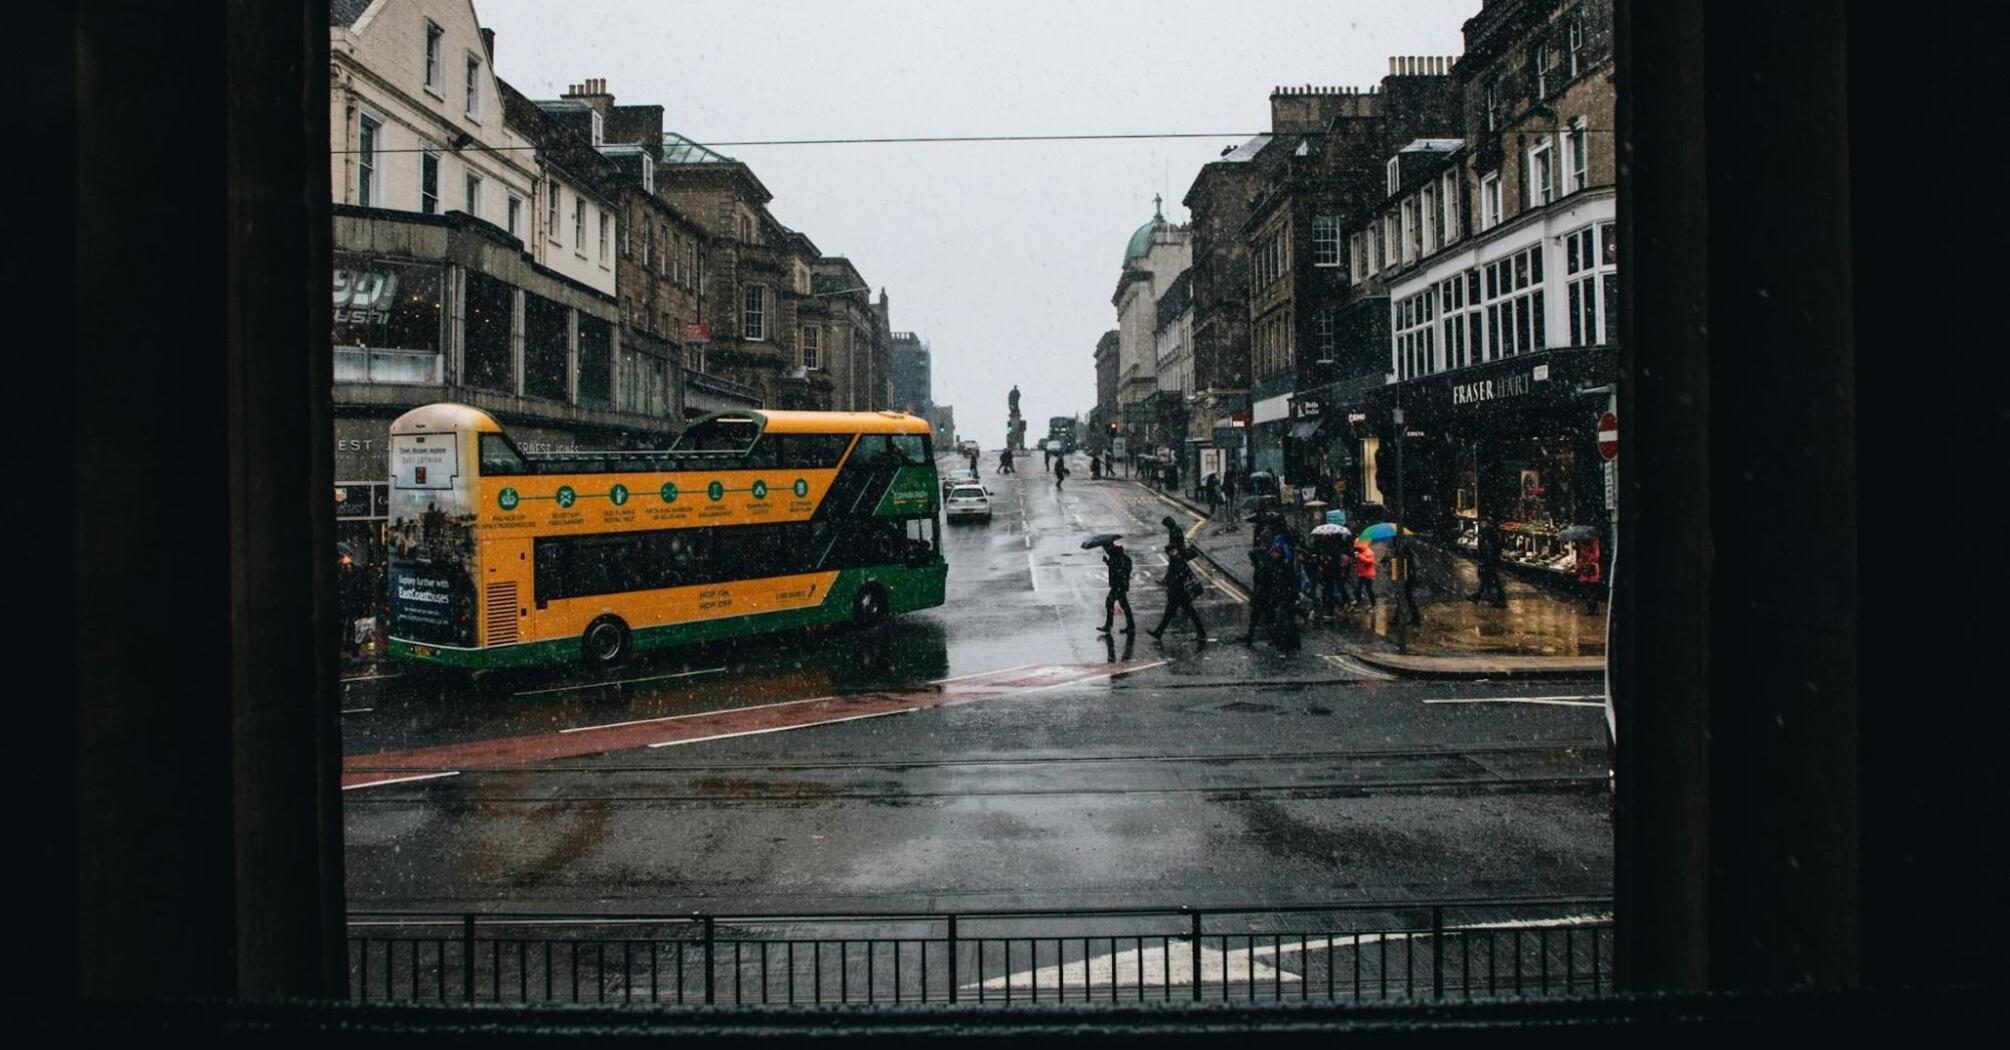 A rainy day in Edinburgh with a bus on the street